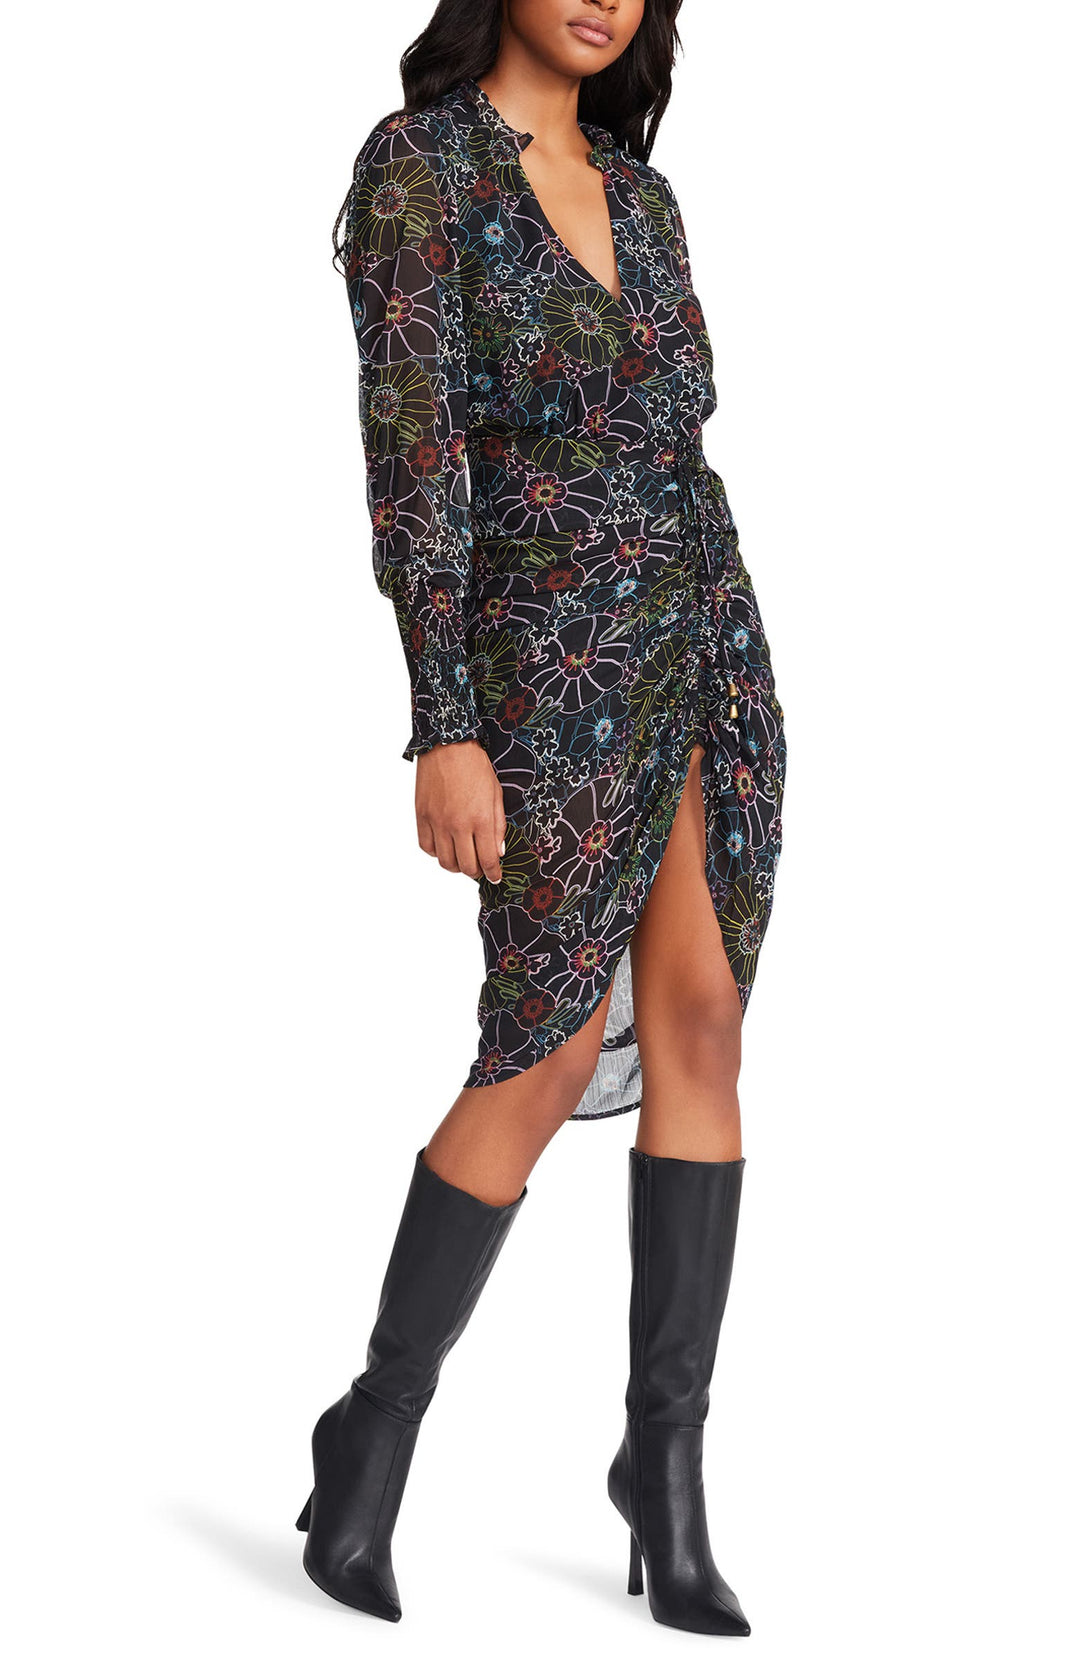 Romany Floral Long Sleeve Dress - Black Multi | BB Dakota By Steve Madden - Clearance